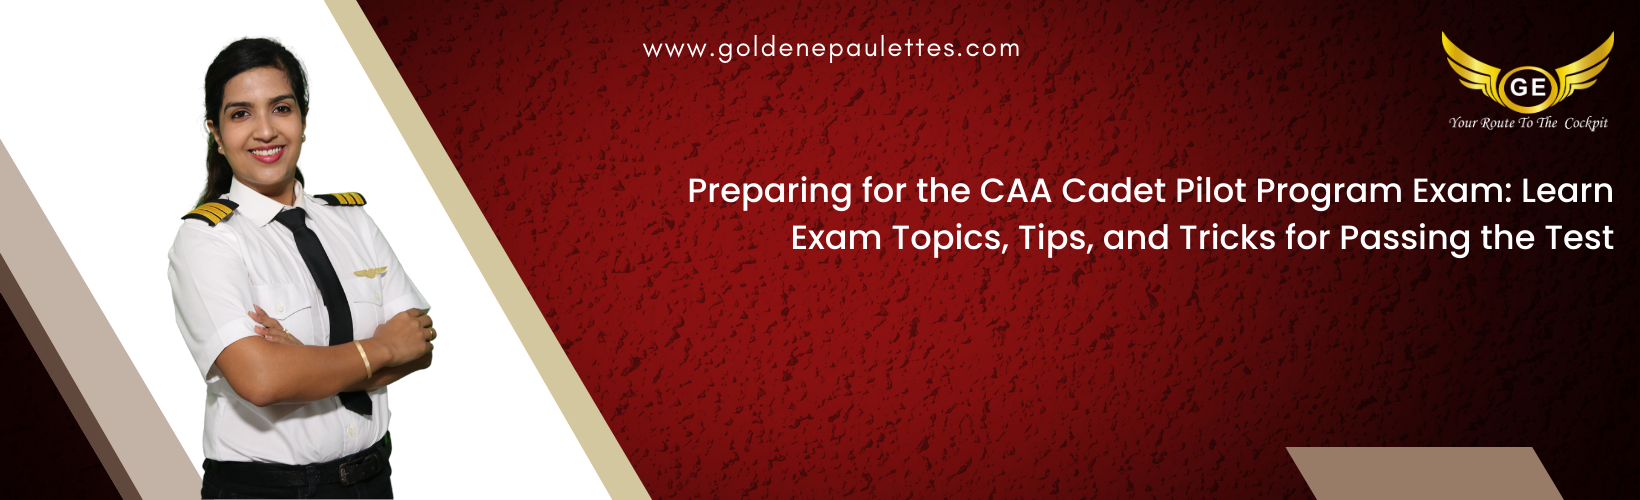 Preparing for the CAA Cadet Pilot Program Exam